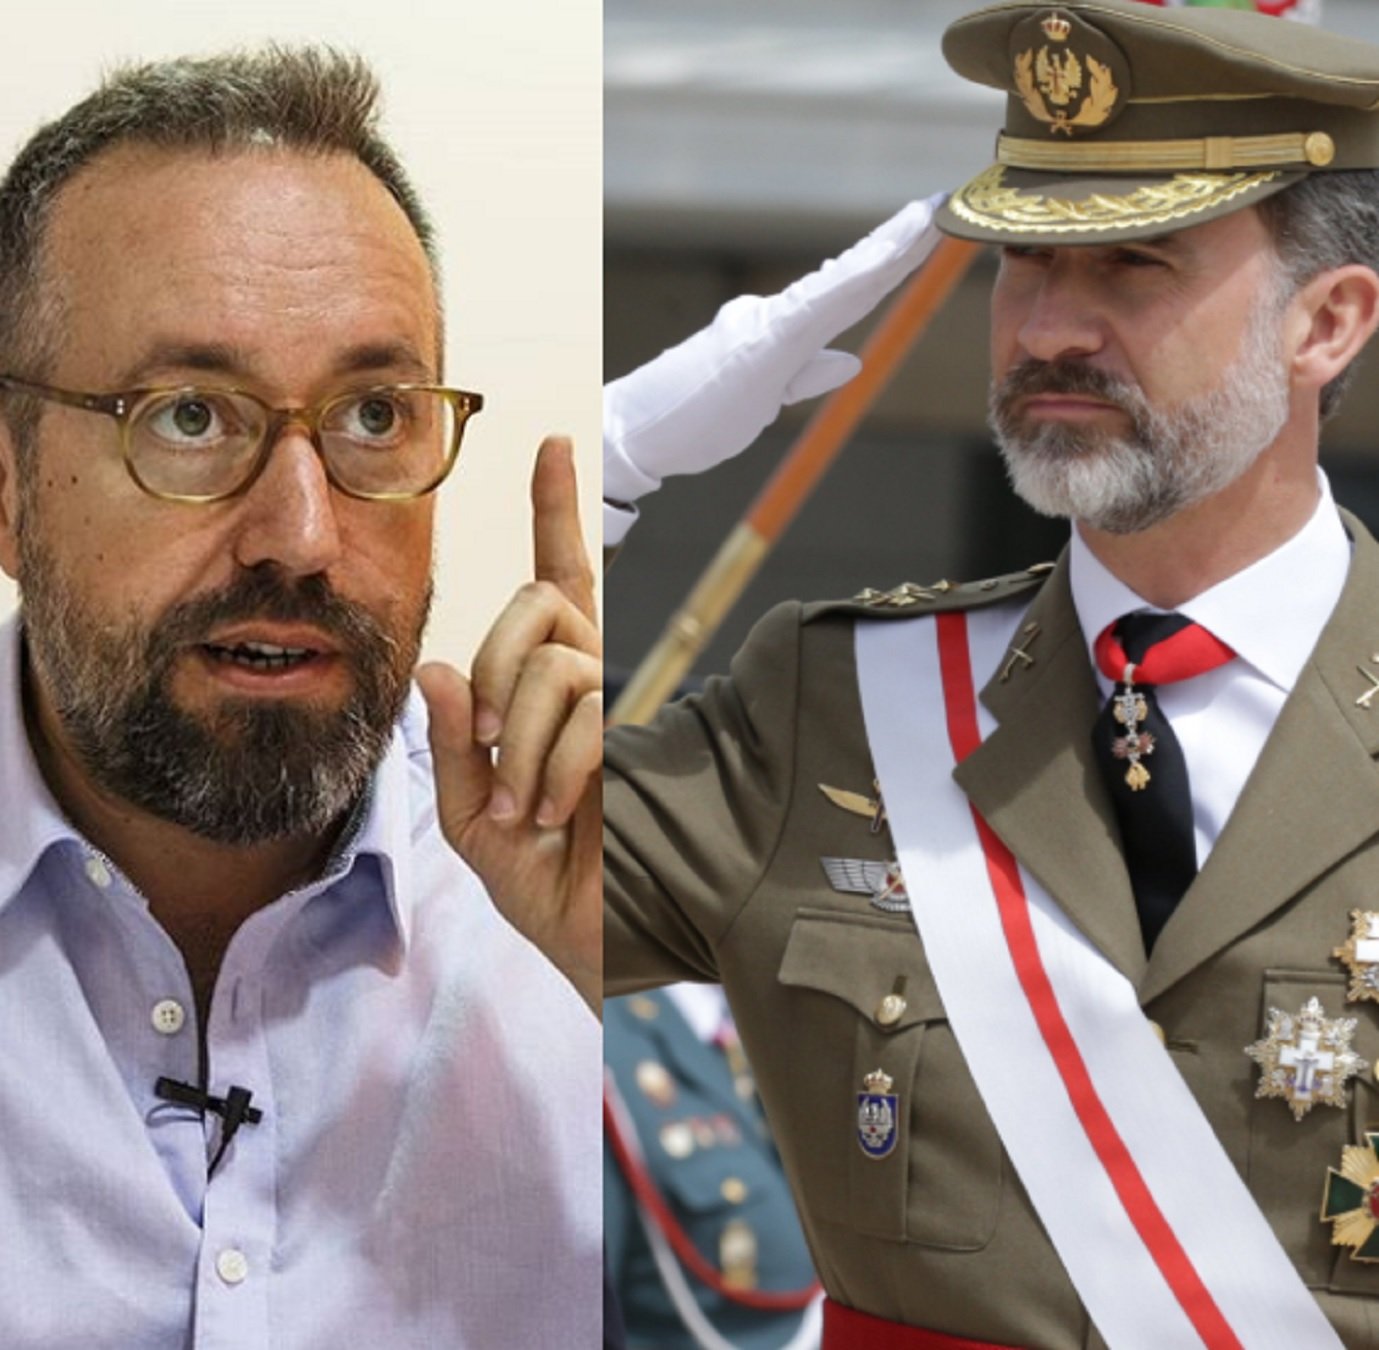 Girauta 'advierte' a un político por bromear sobre el rey Felipe